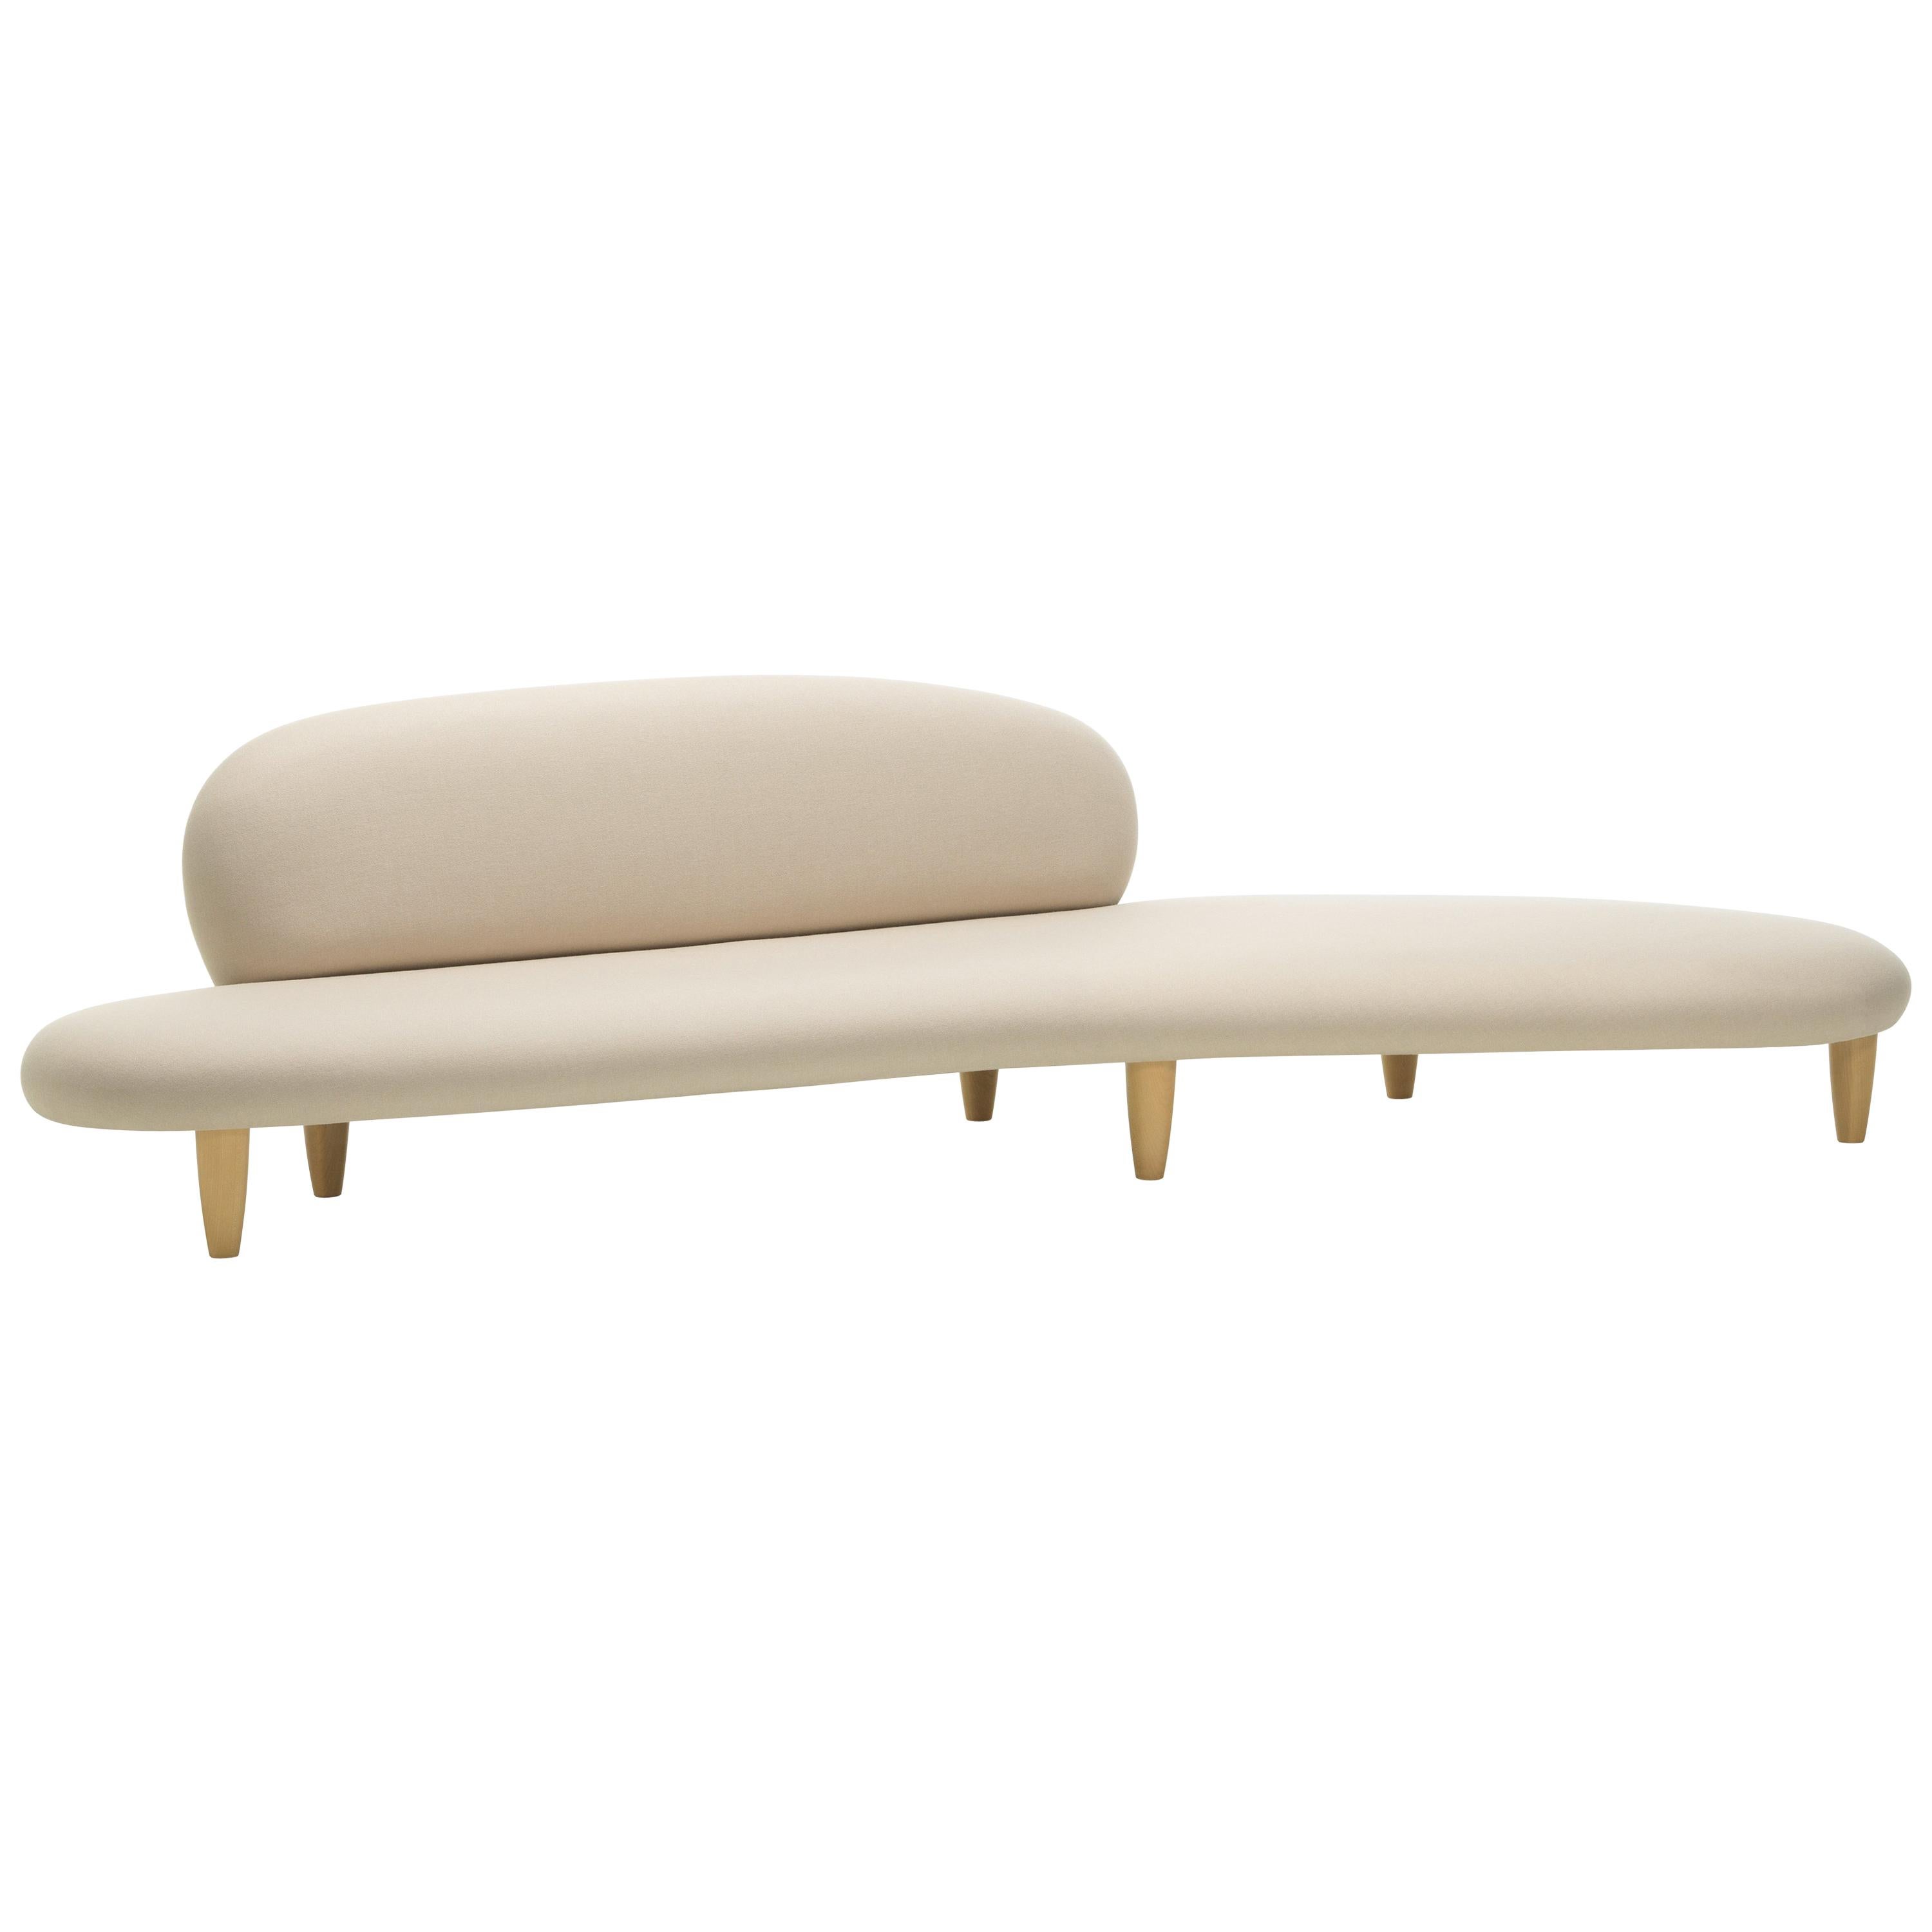 Vitra Freeform Sofa in Cream Credo with Maple Legs by Isamu Noguchi For Sale